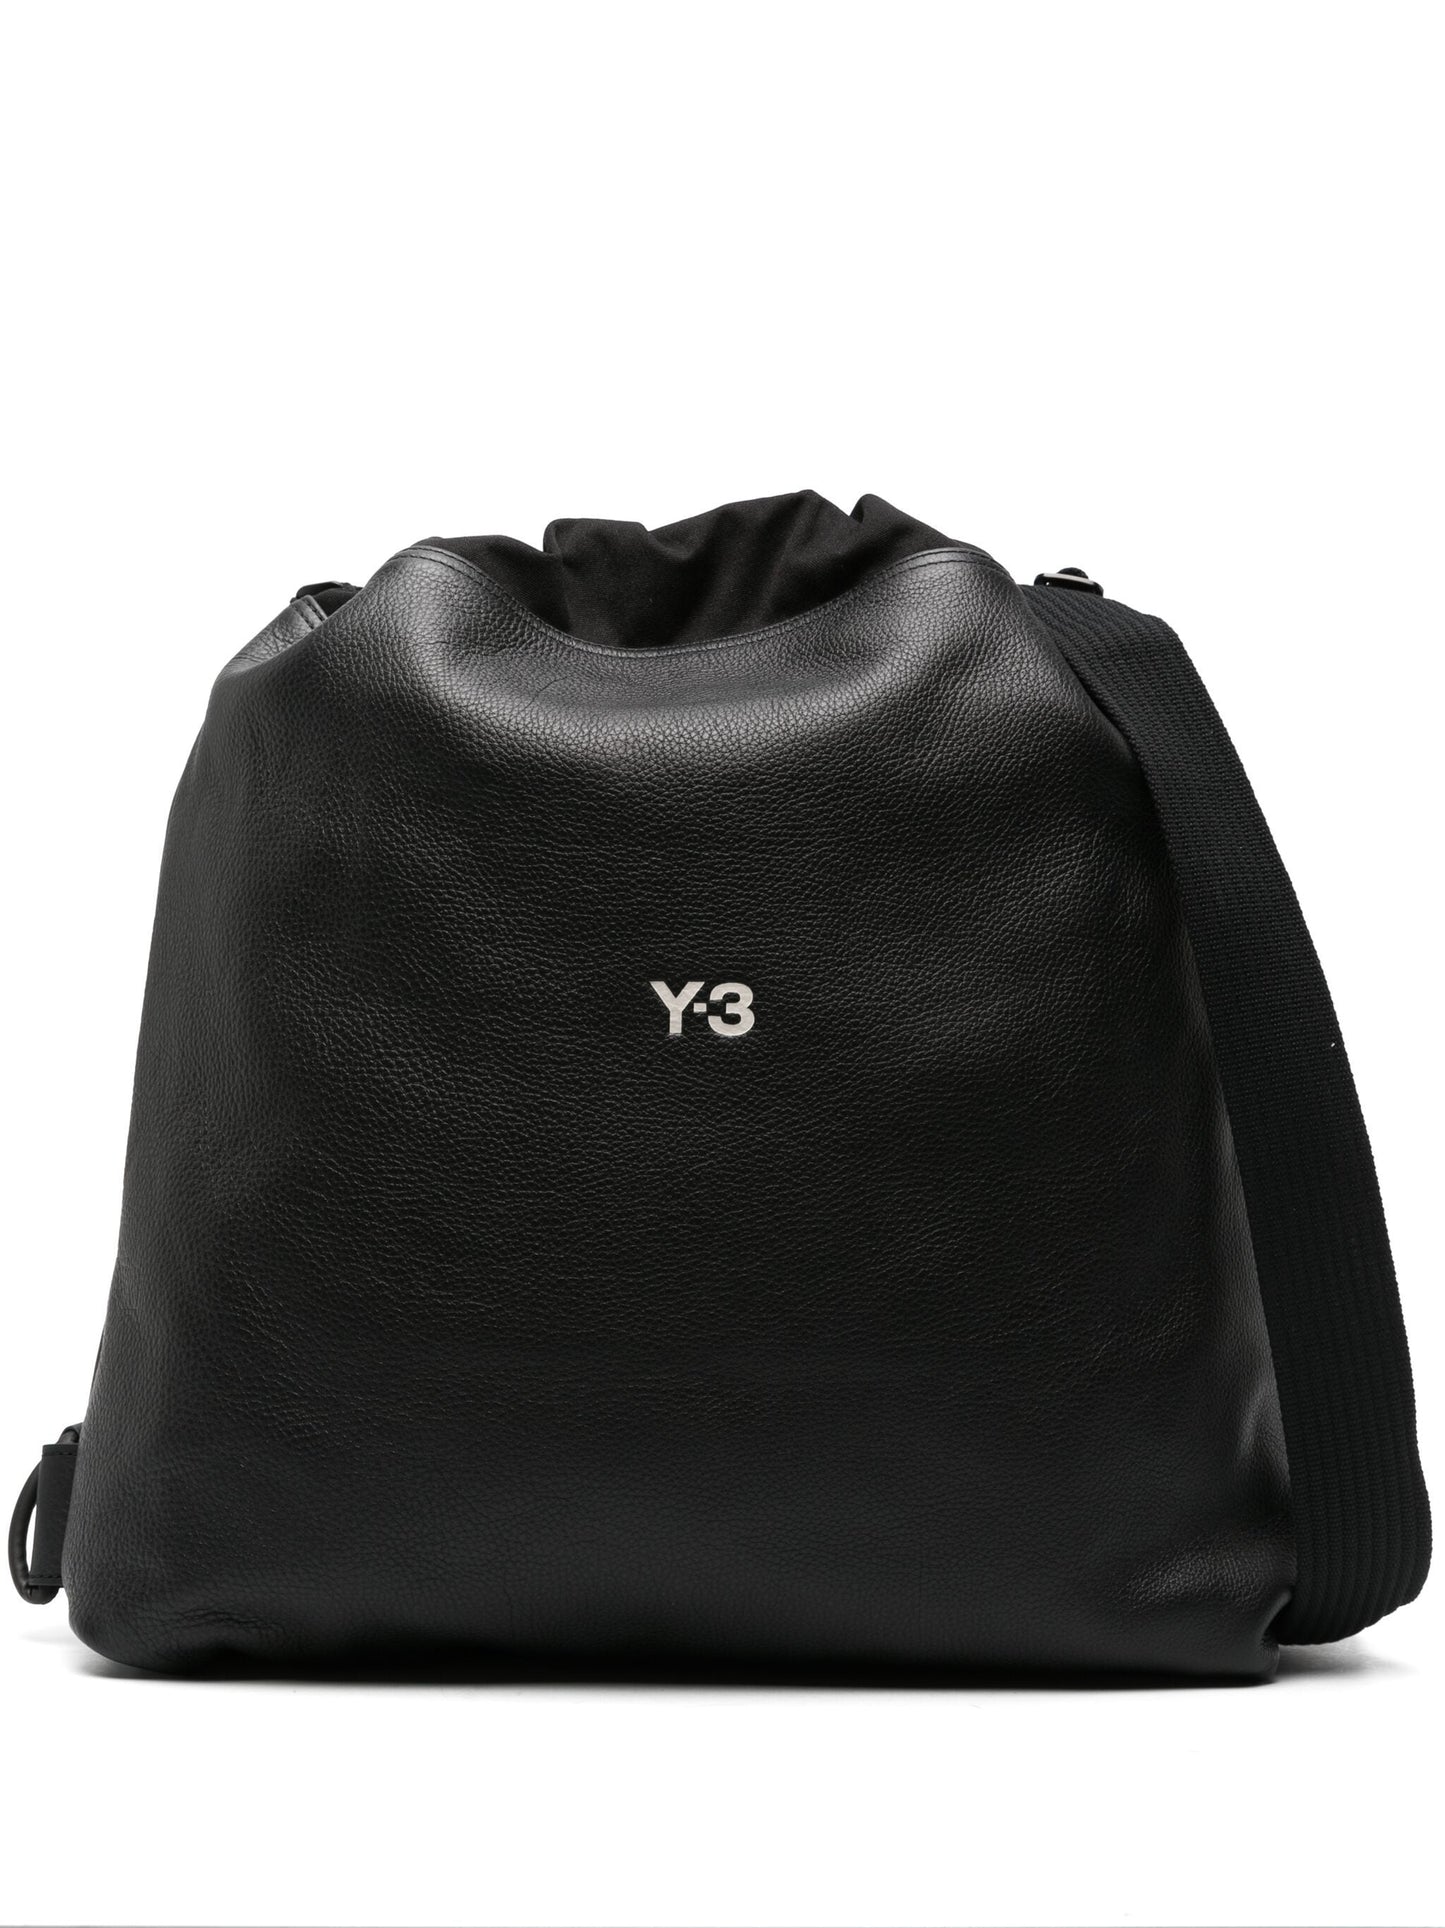 Y 3 Lux Gym Bag